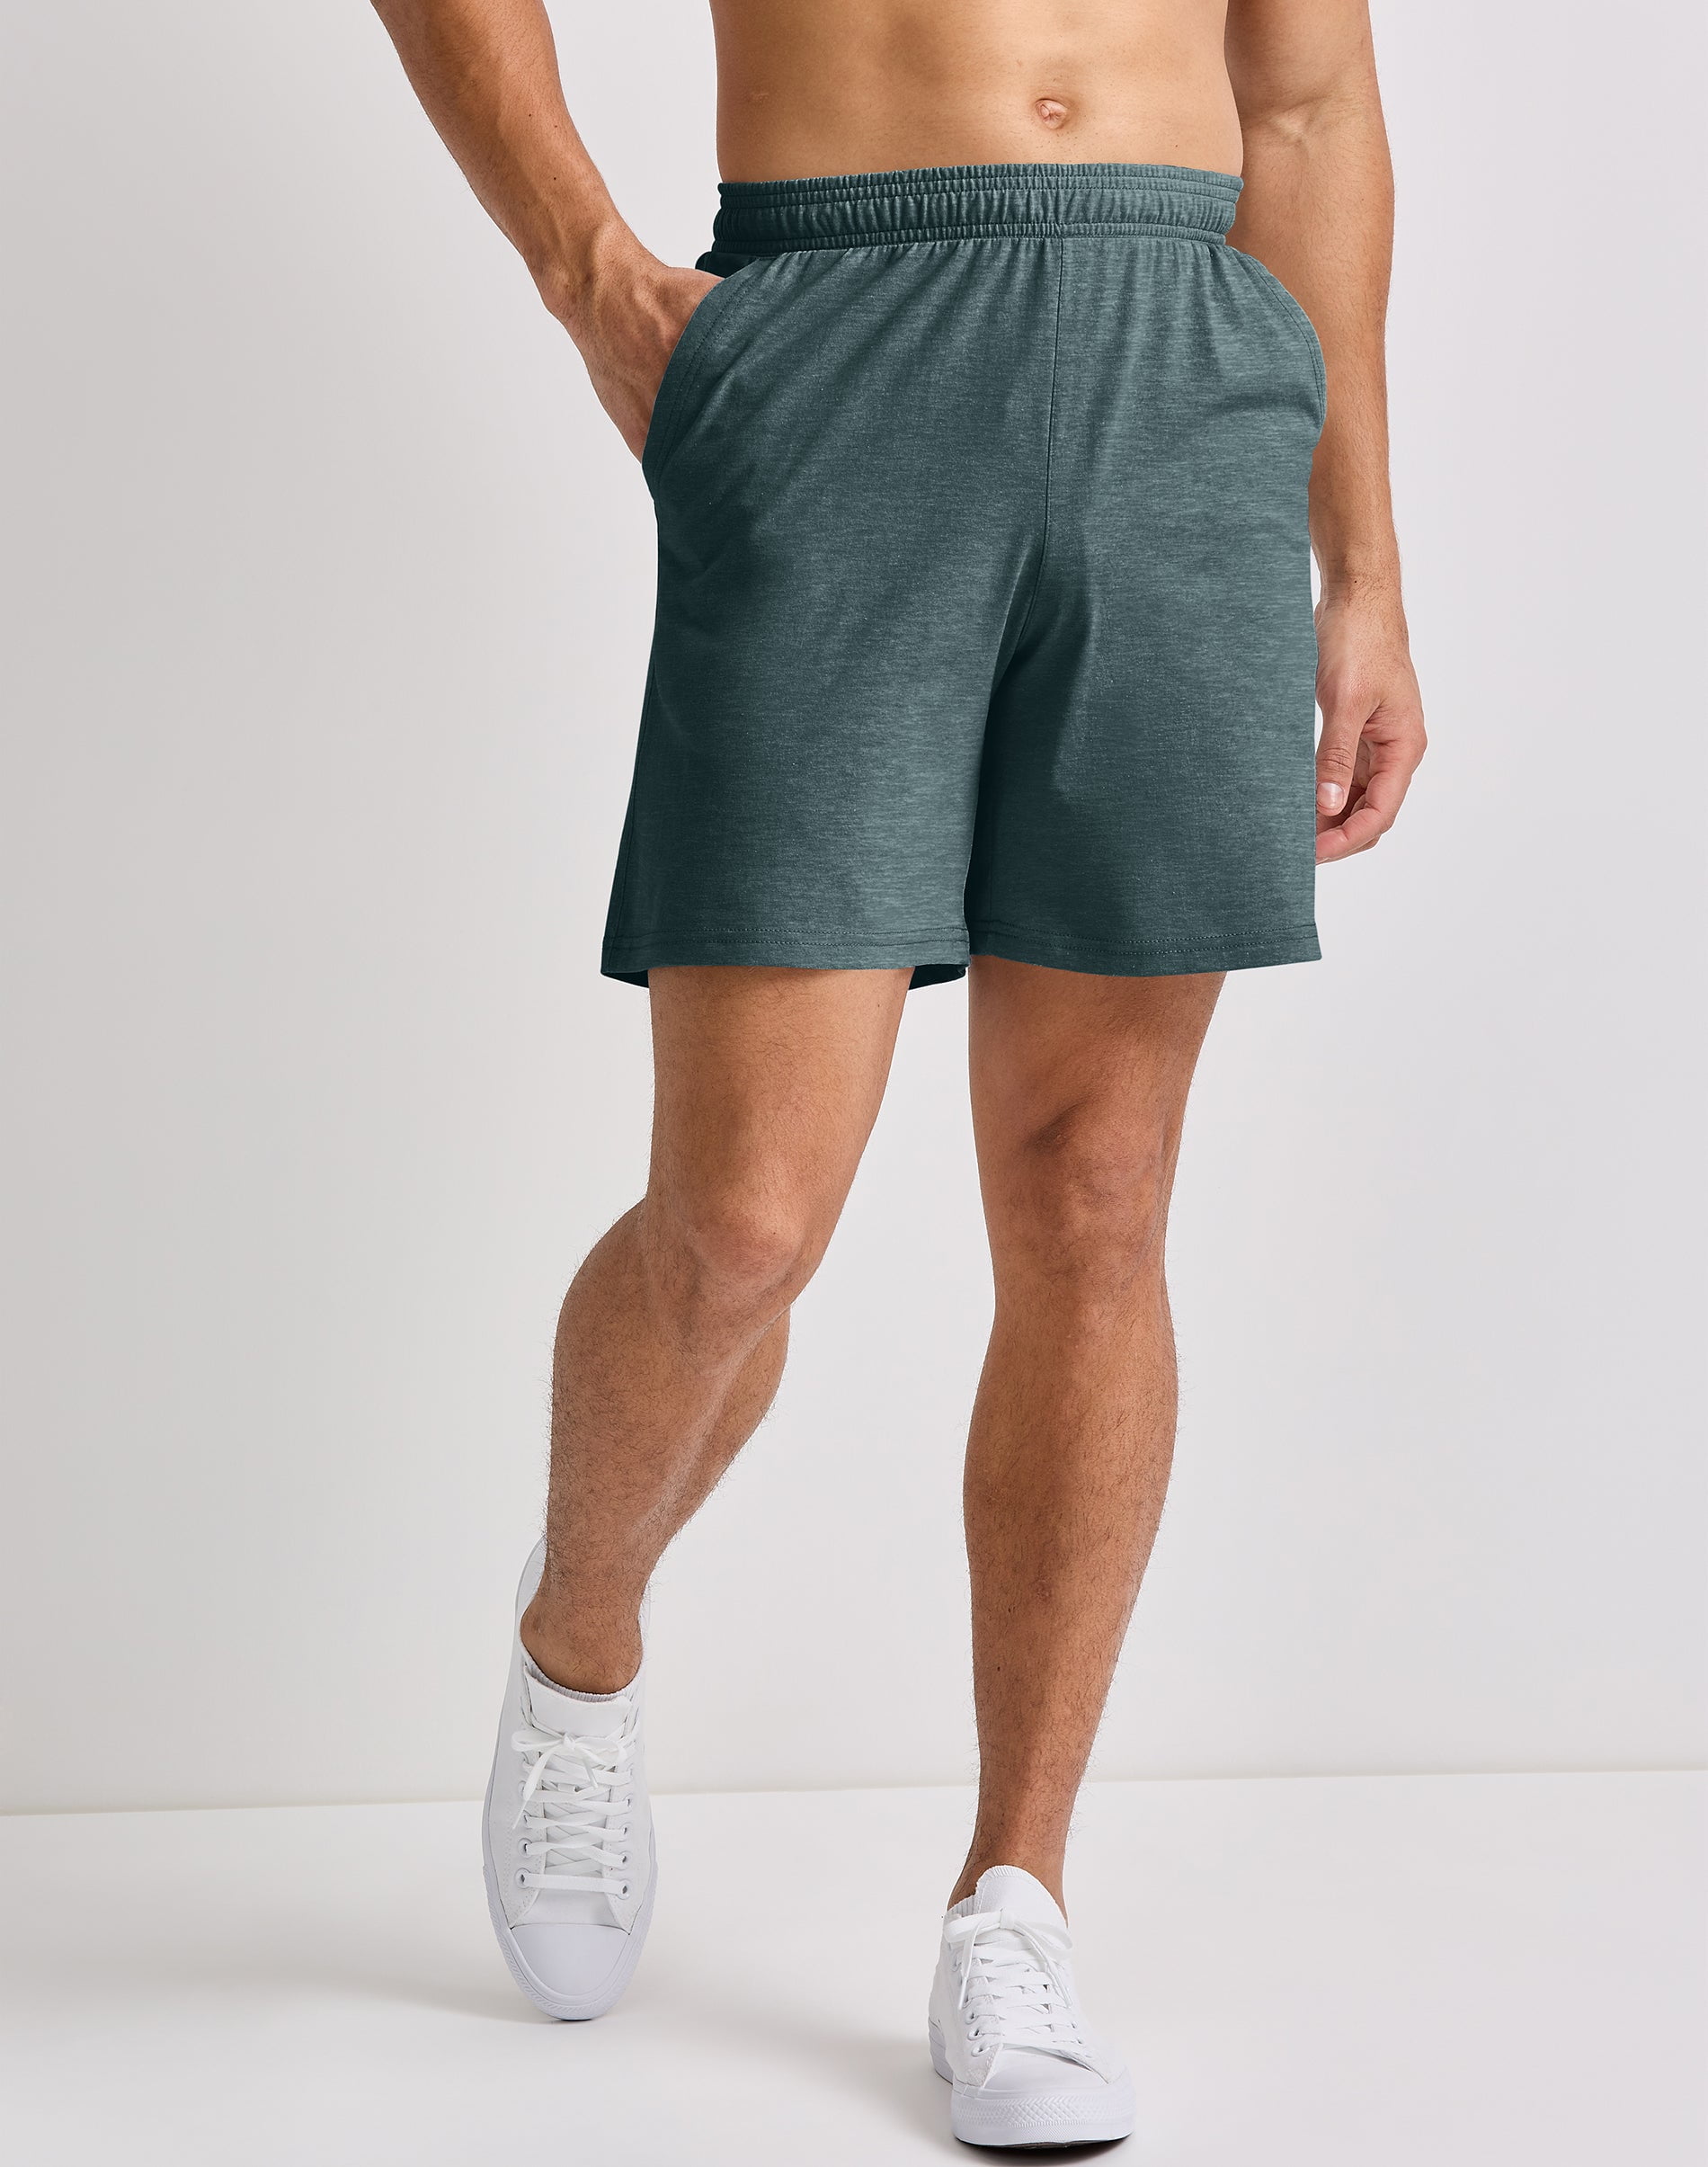 Hanes Originals Men's Shorts with Pockets, Tri-Blend Cactus Heather L ...